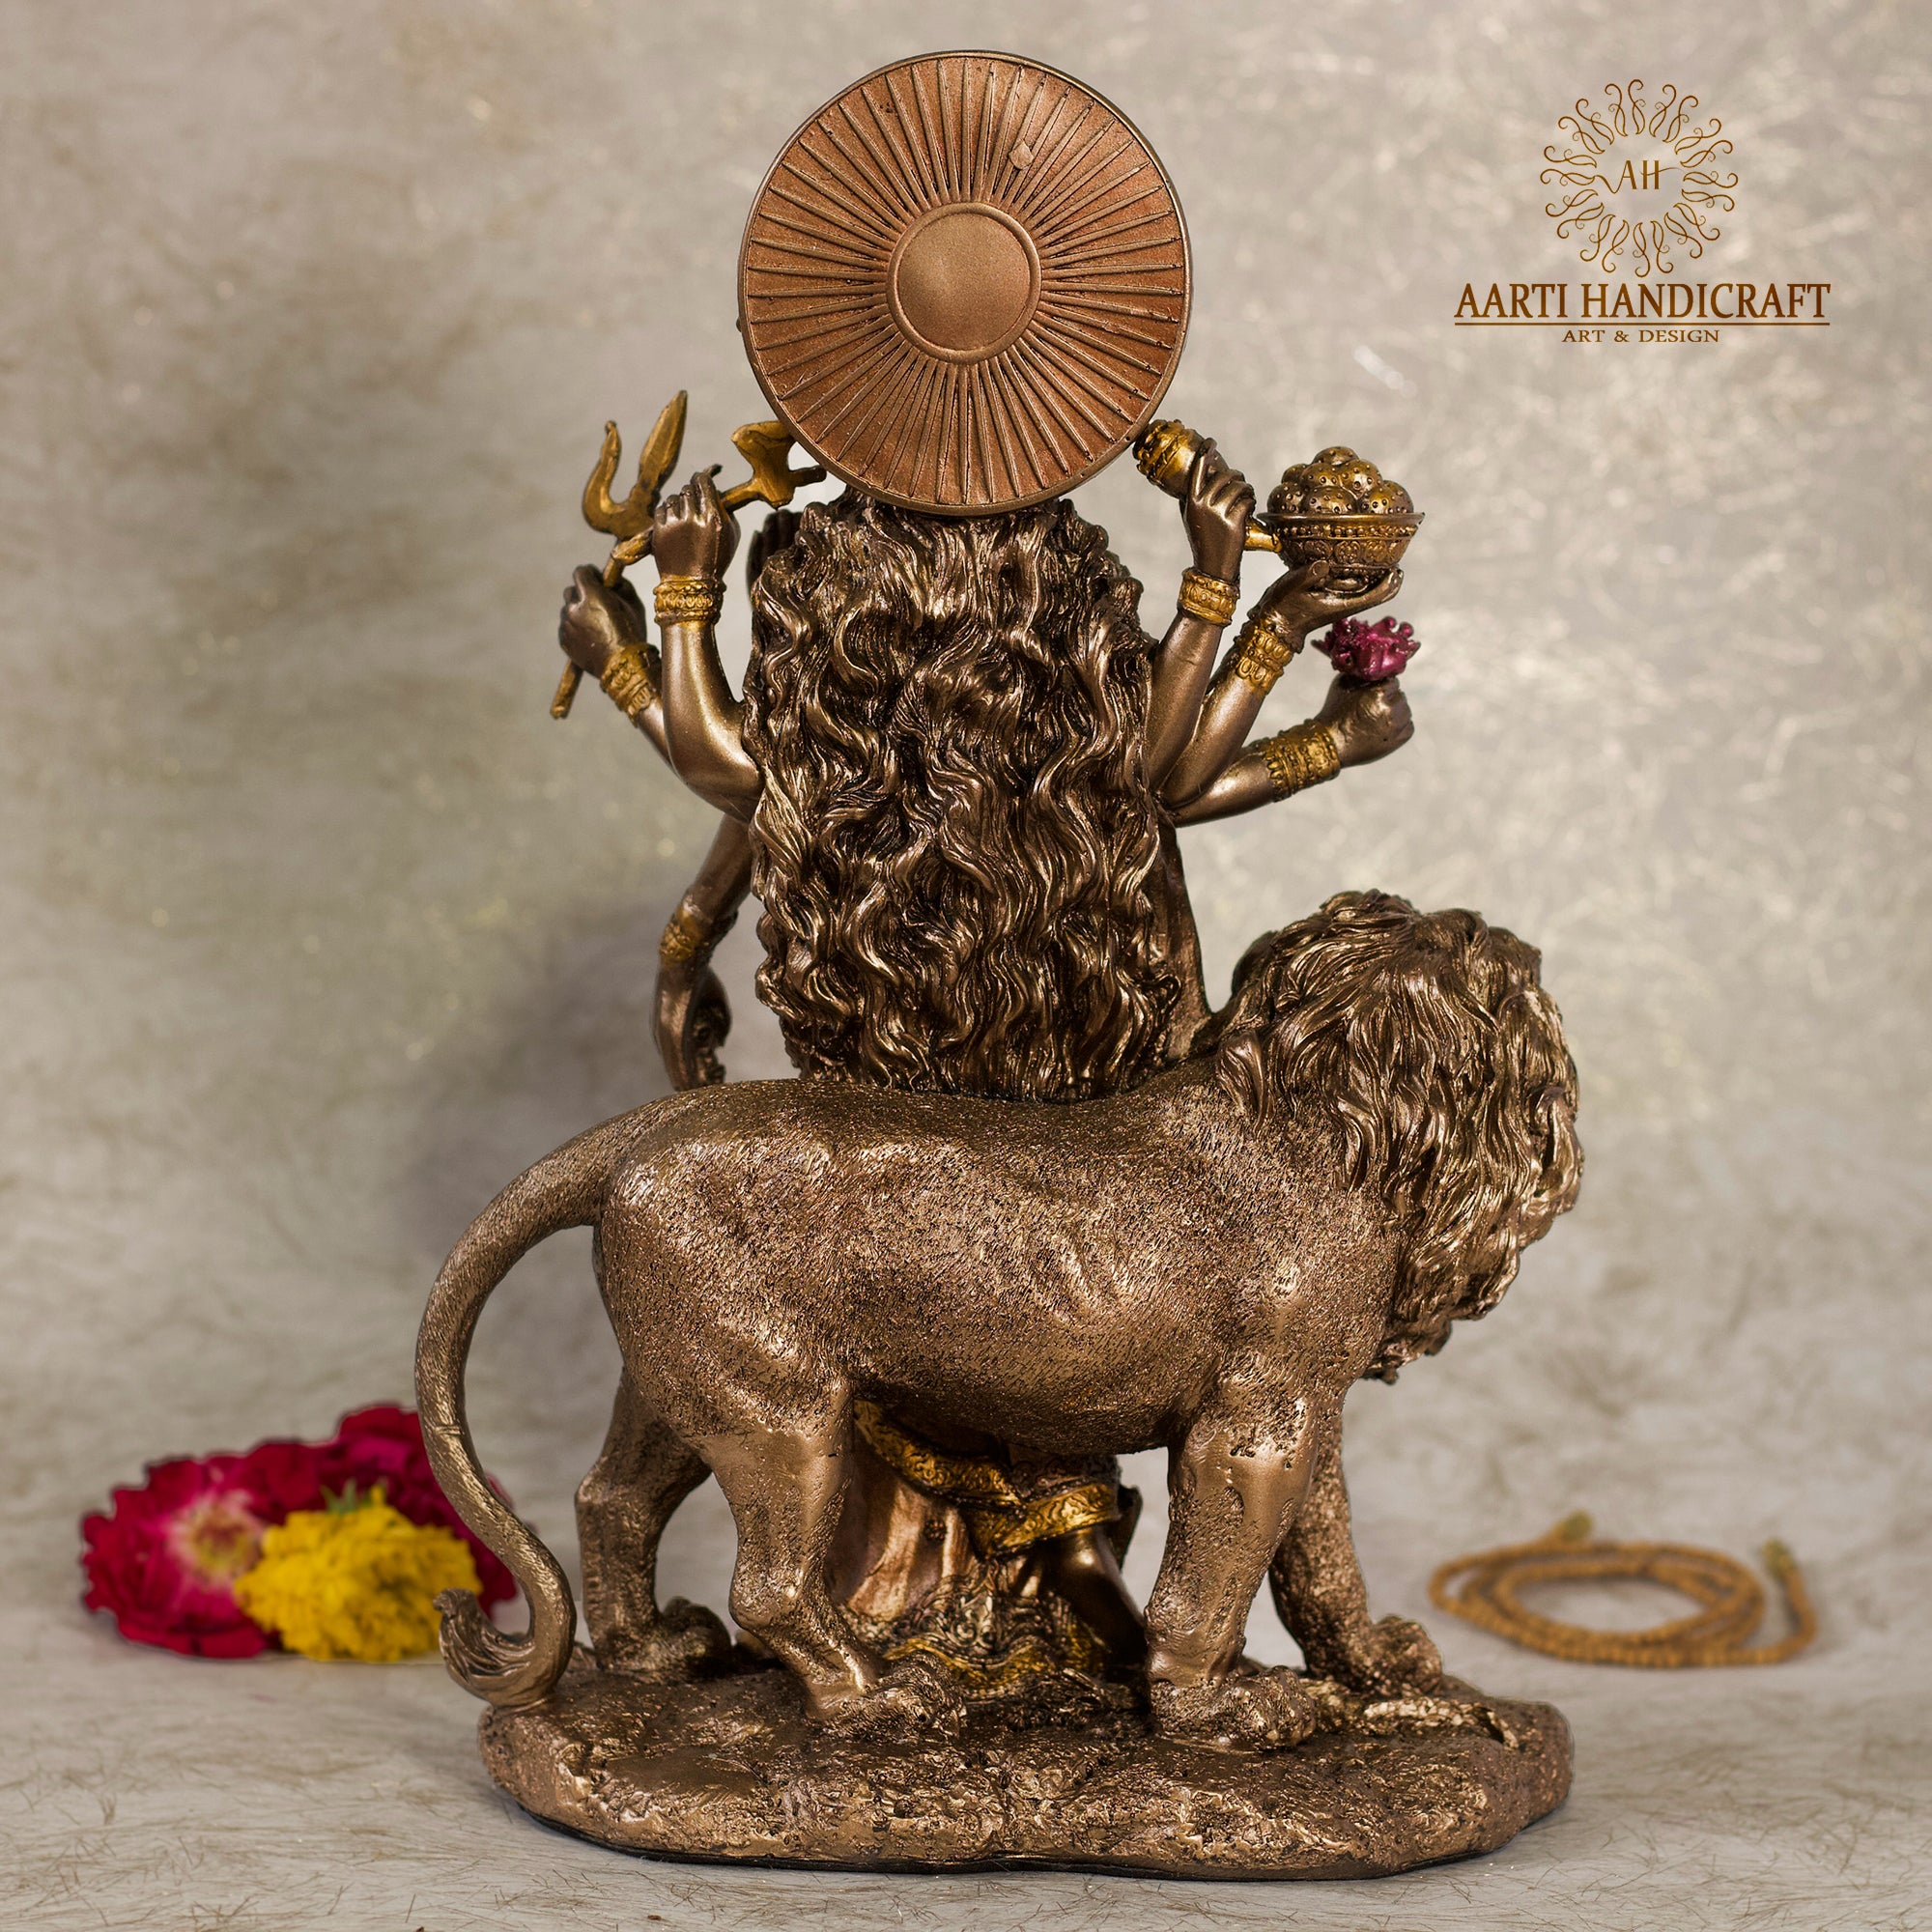 11" Goddess Durga Idol In Copper Finish